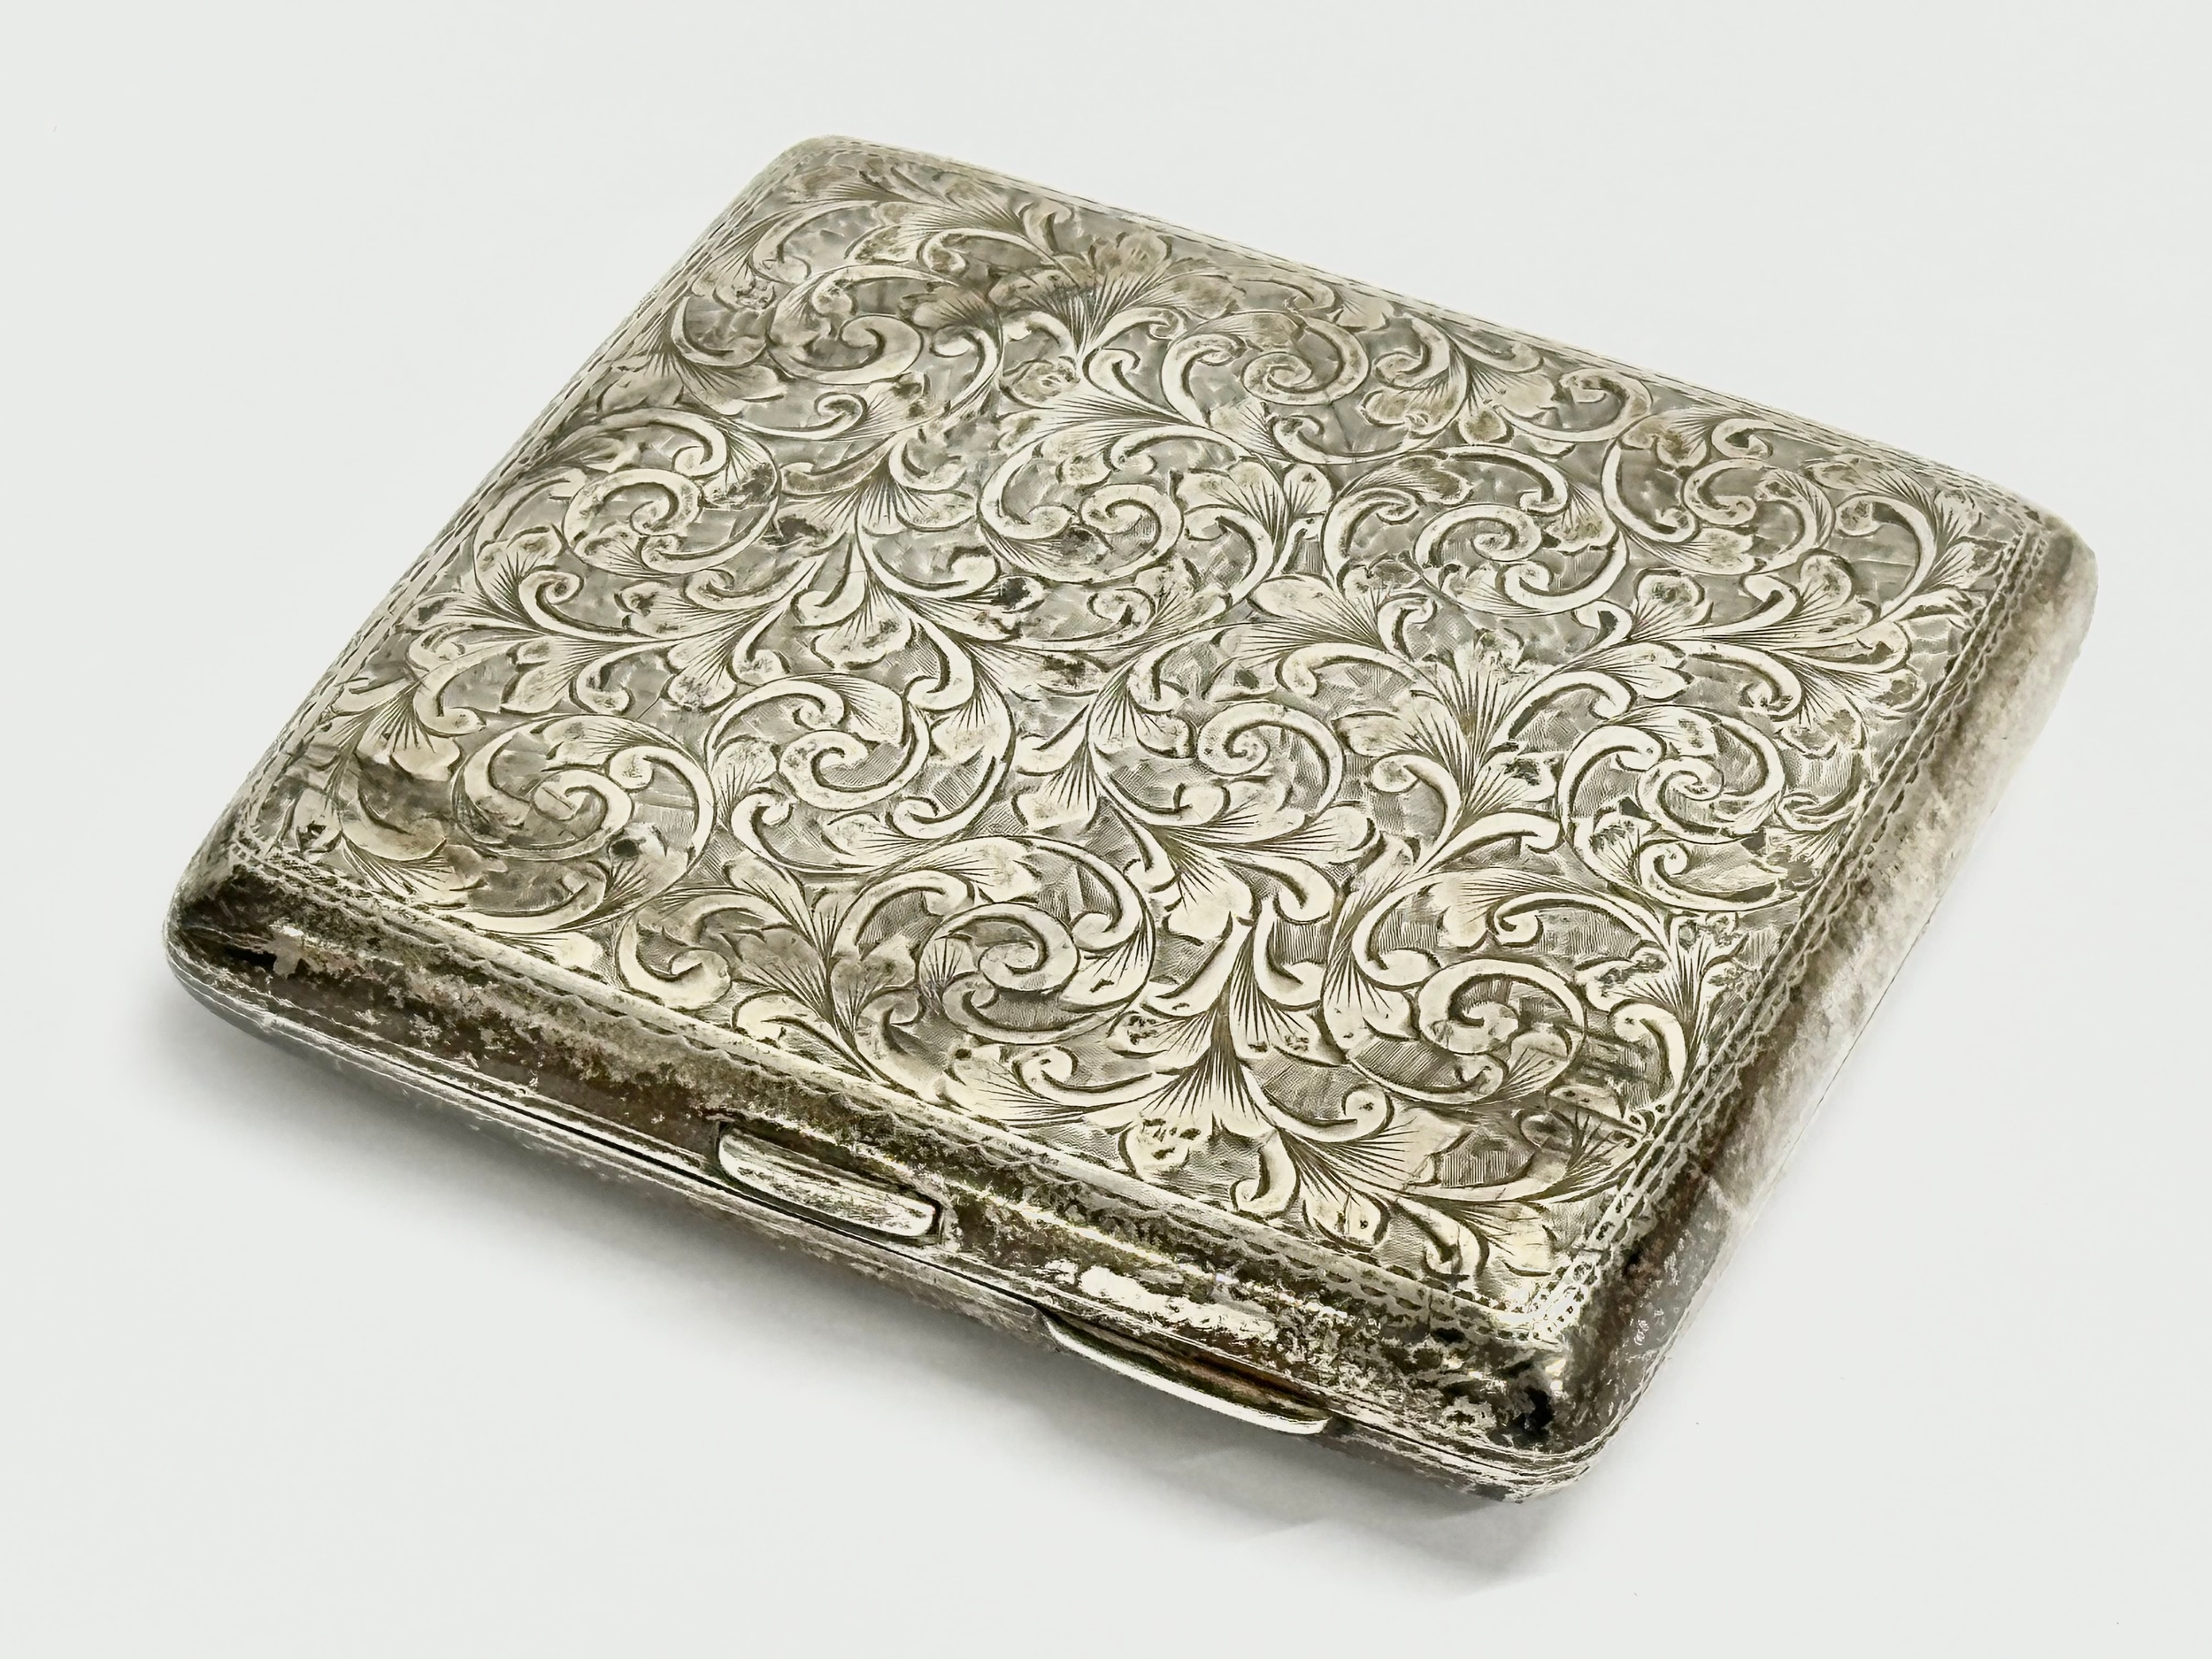 A Late 19th Century Walker & Hall silver cigarette case. 114.26 grams.